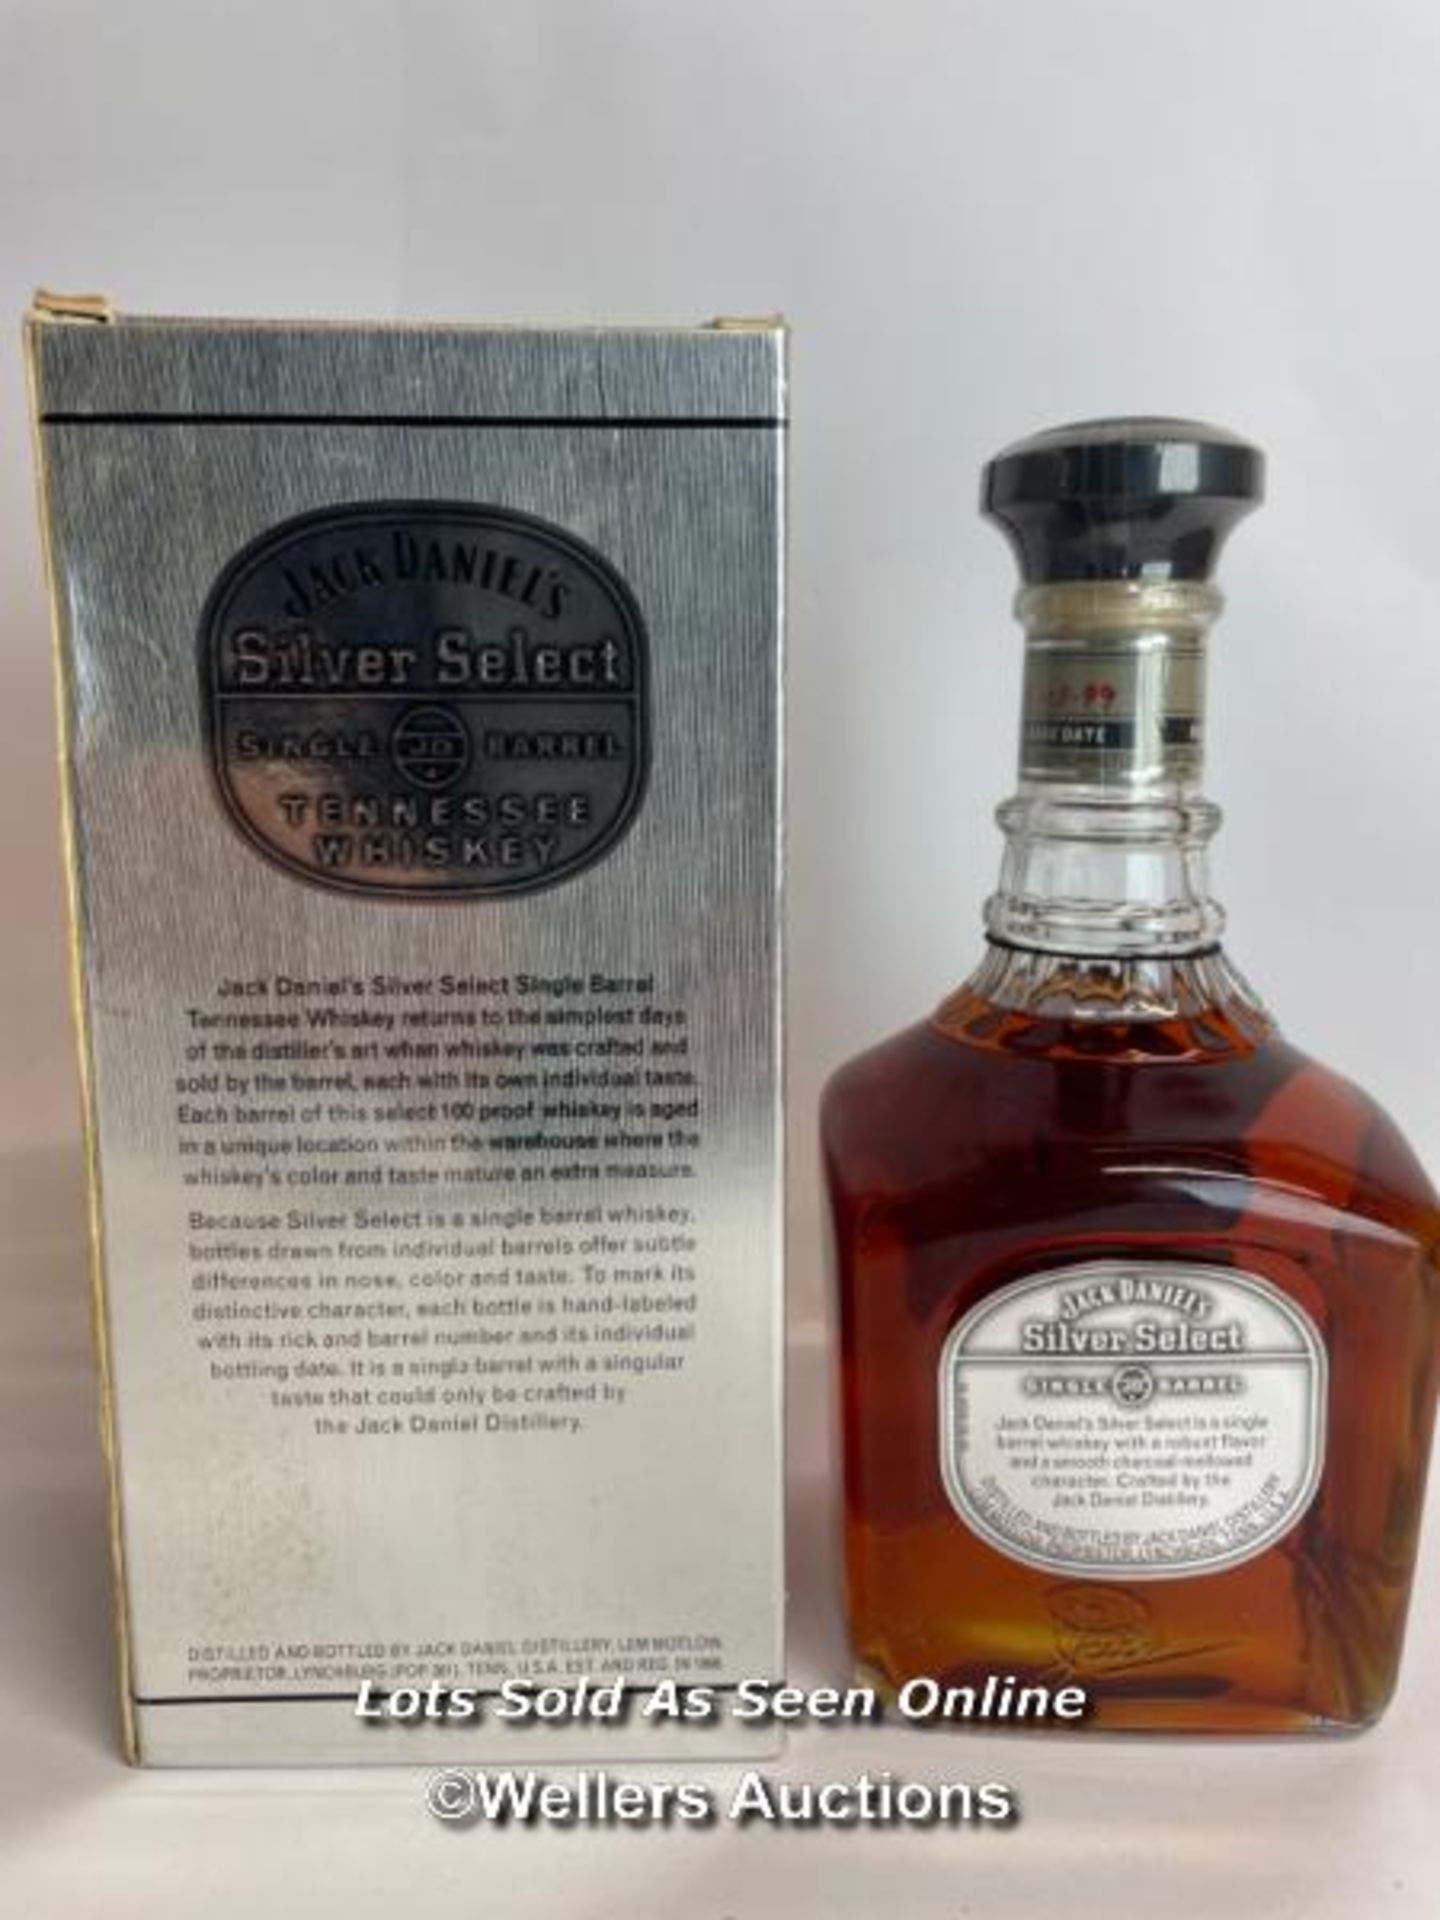 Jack Daniels Silver Select Single Barrel Tennessee Whiskey, Release date: 11-03-99, Barrek no: 9- - Image 3 of 8